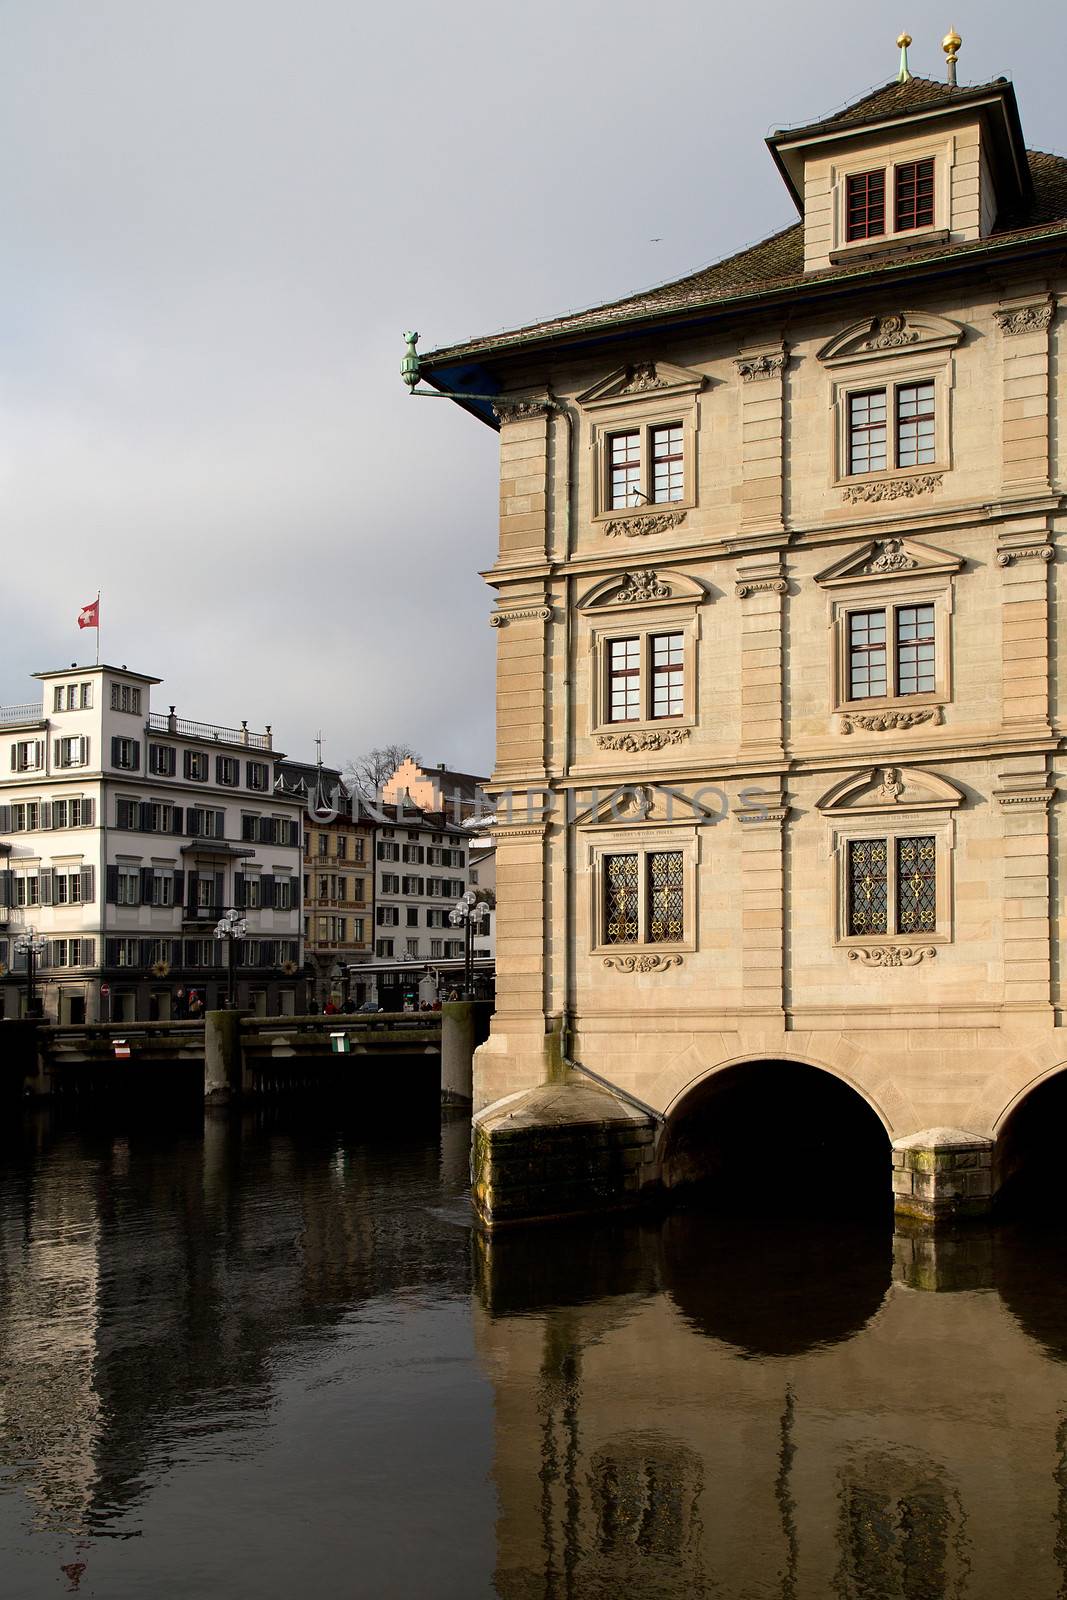 View of the town hall - rathaus of Zurich in Switzerland